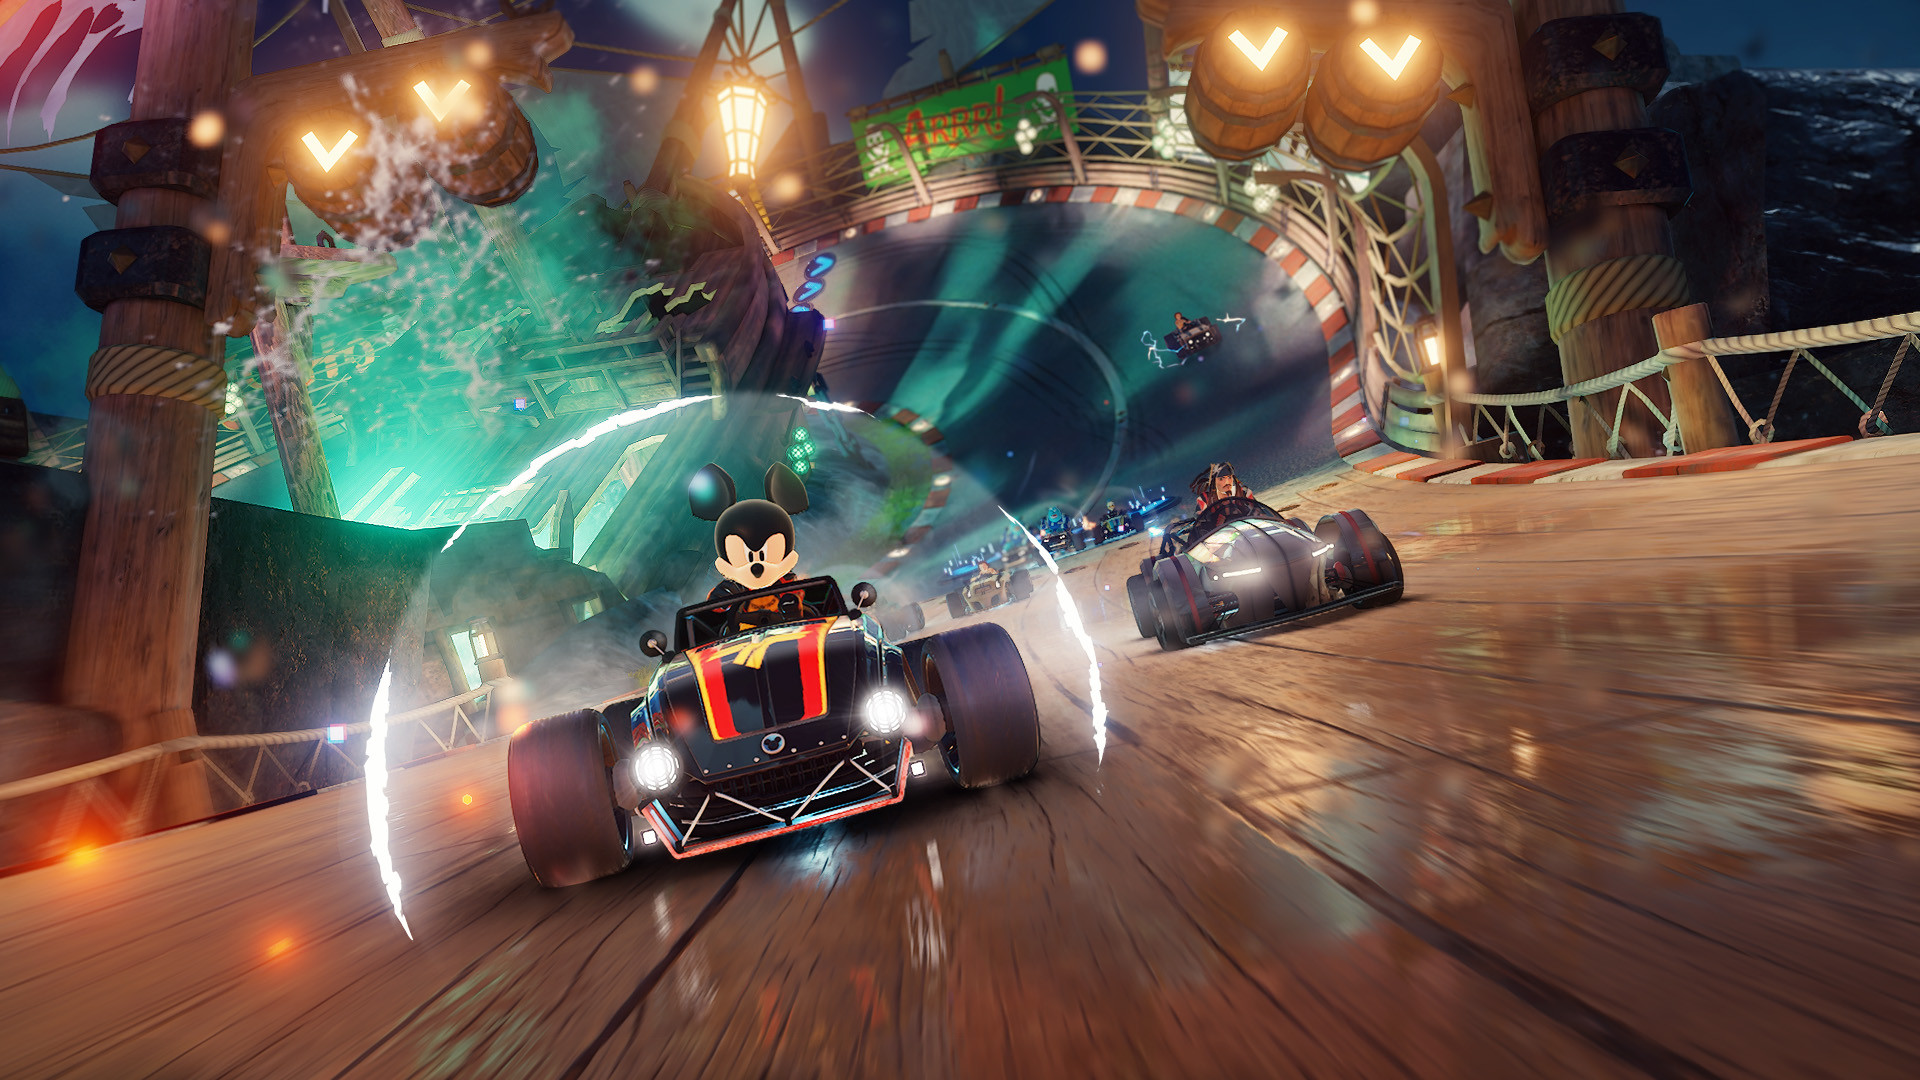 Mario Kart Tour vs. Sonic Racing: Which game should you play? - Polygon